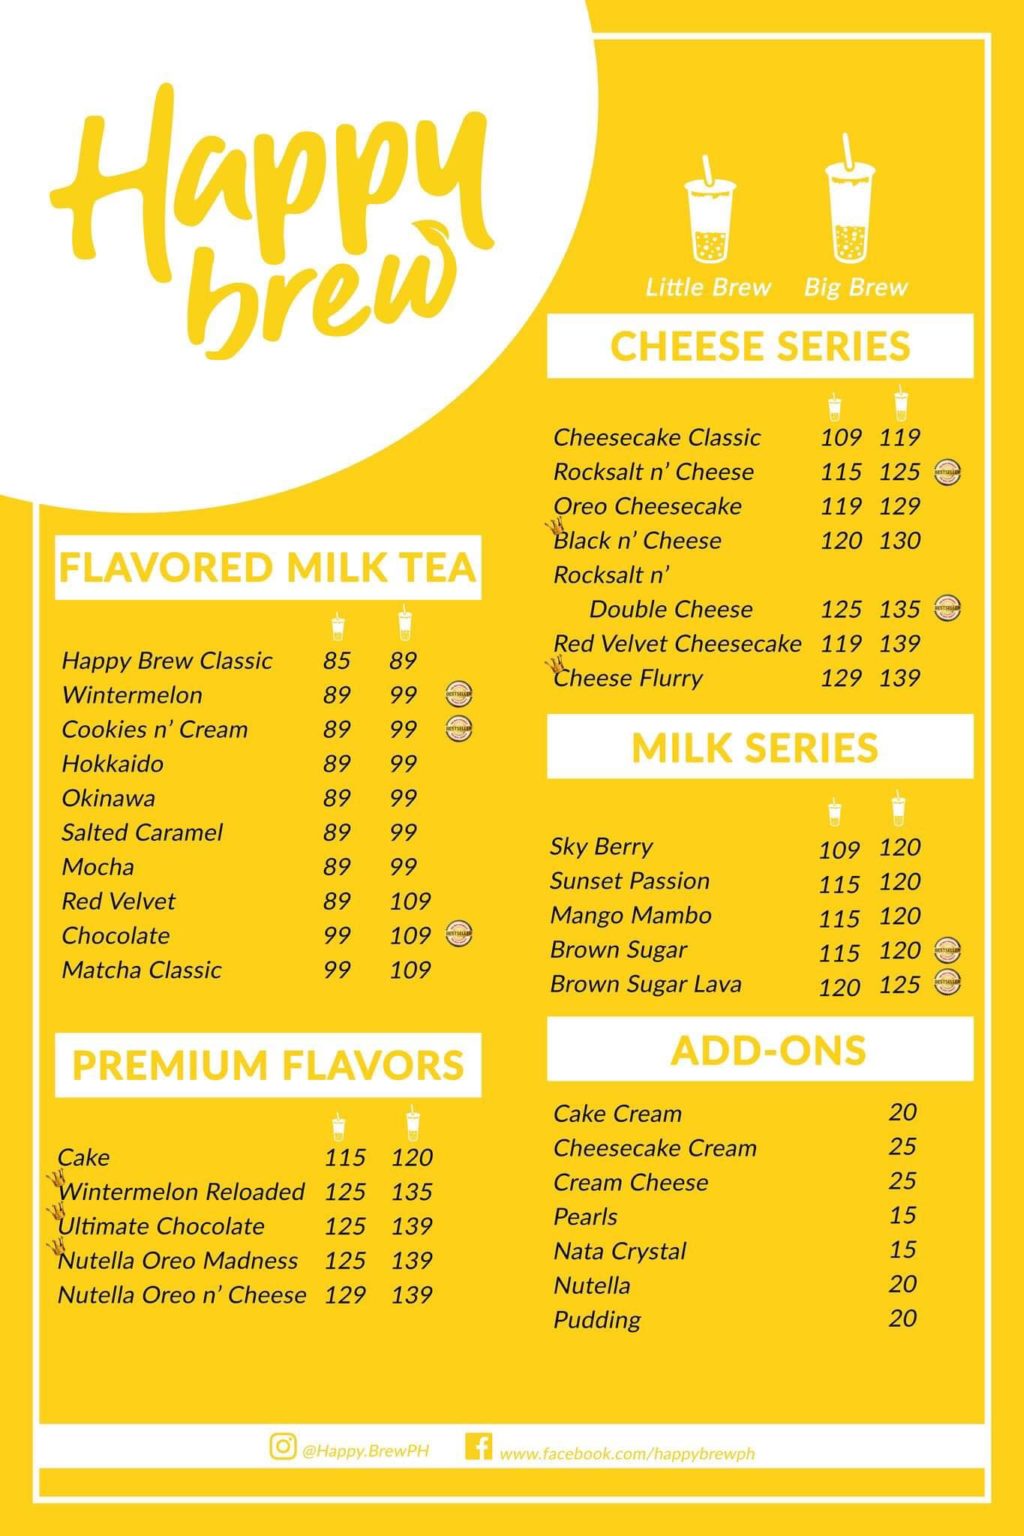 A photo of happy brew's milktea menu